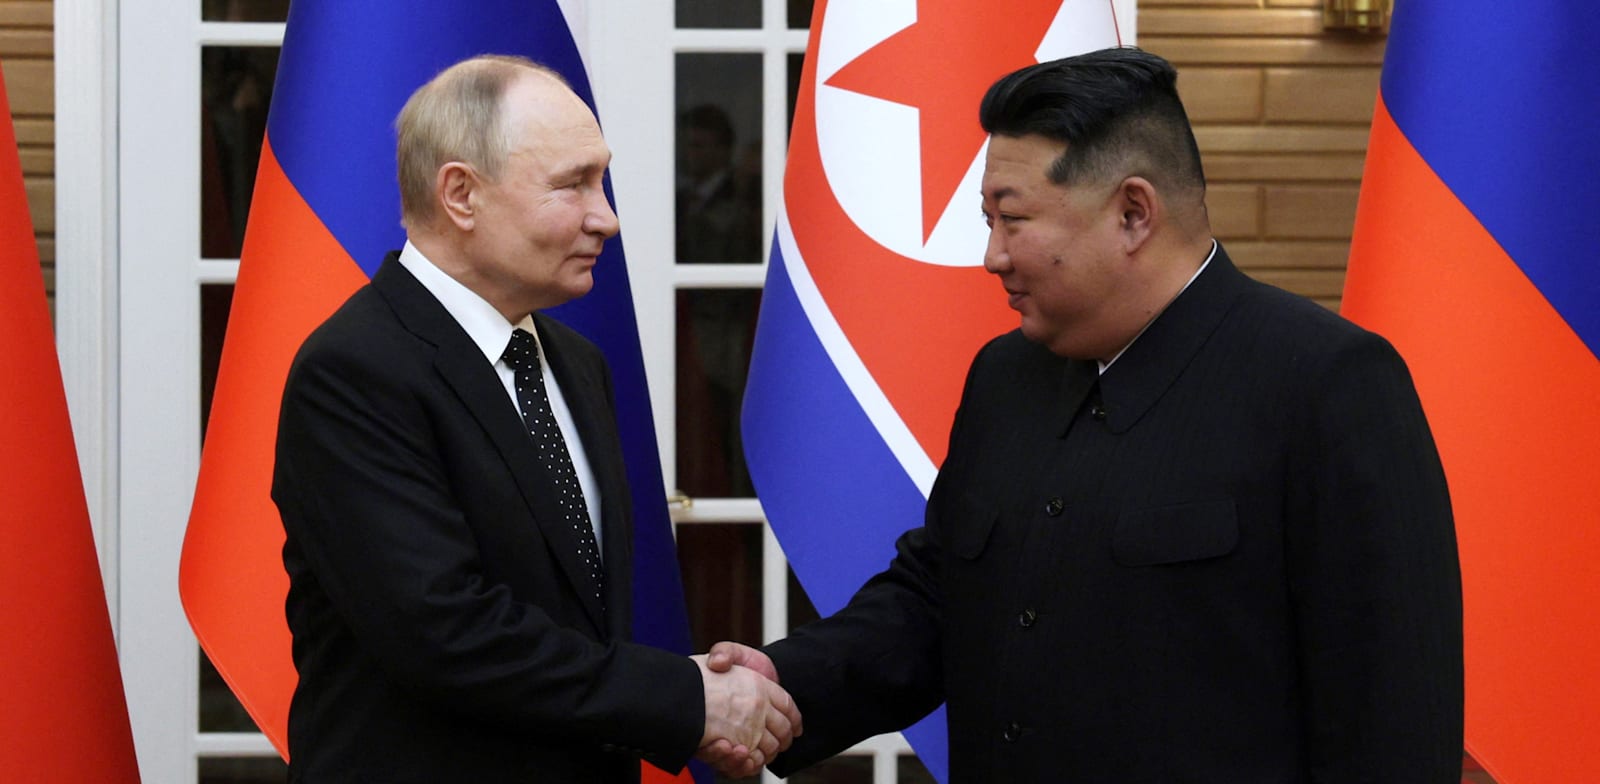 Putin forges a risky partnership with North Korea